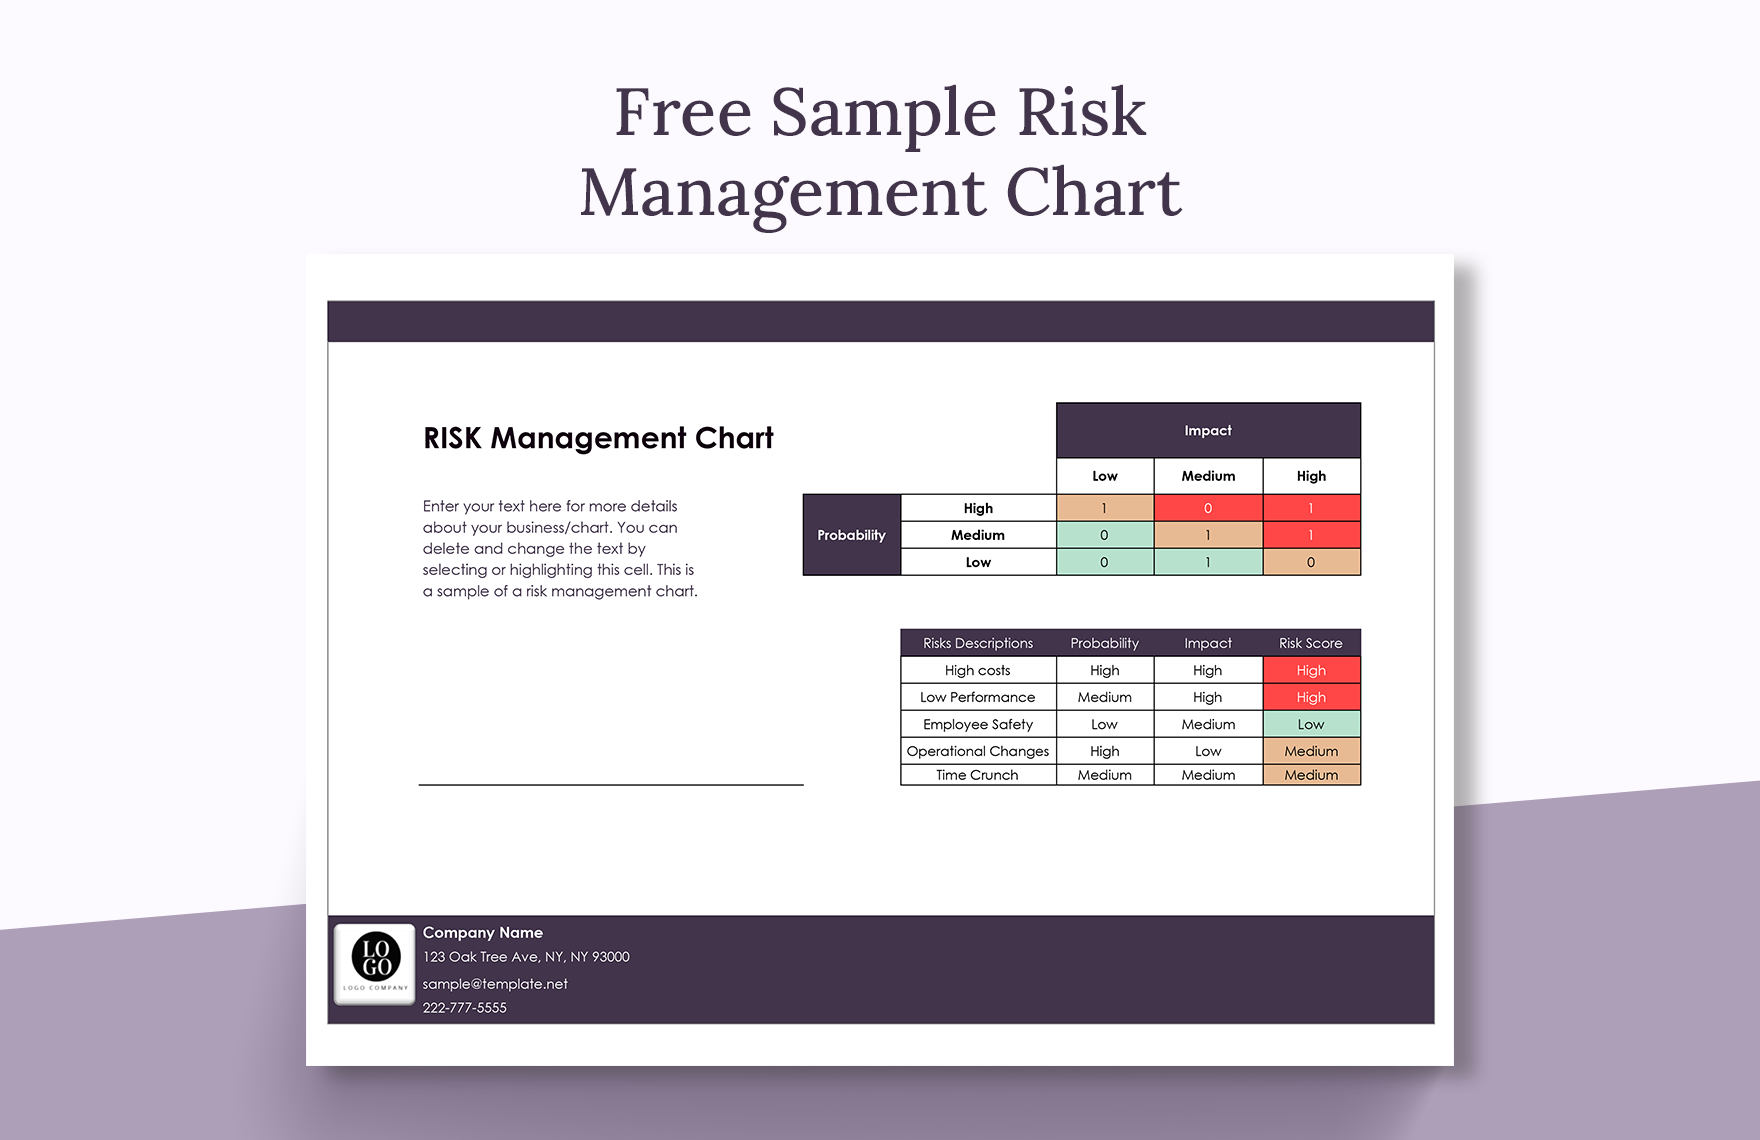 Free Sample Risk Management Chart